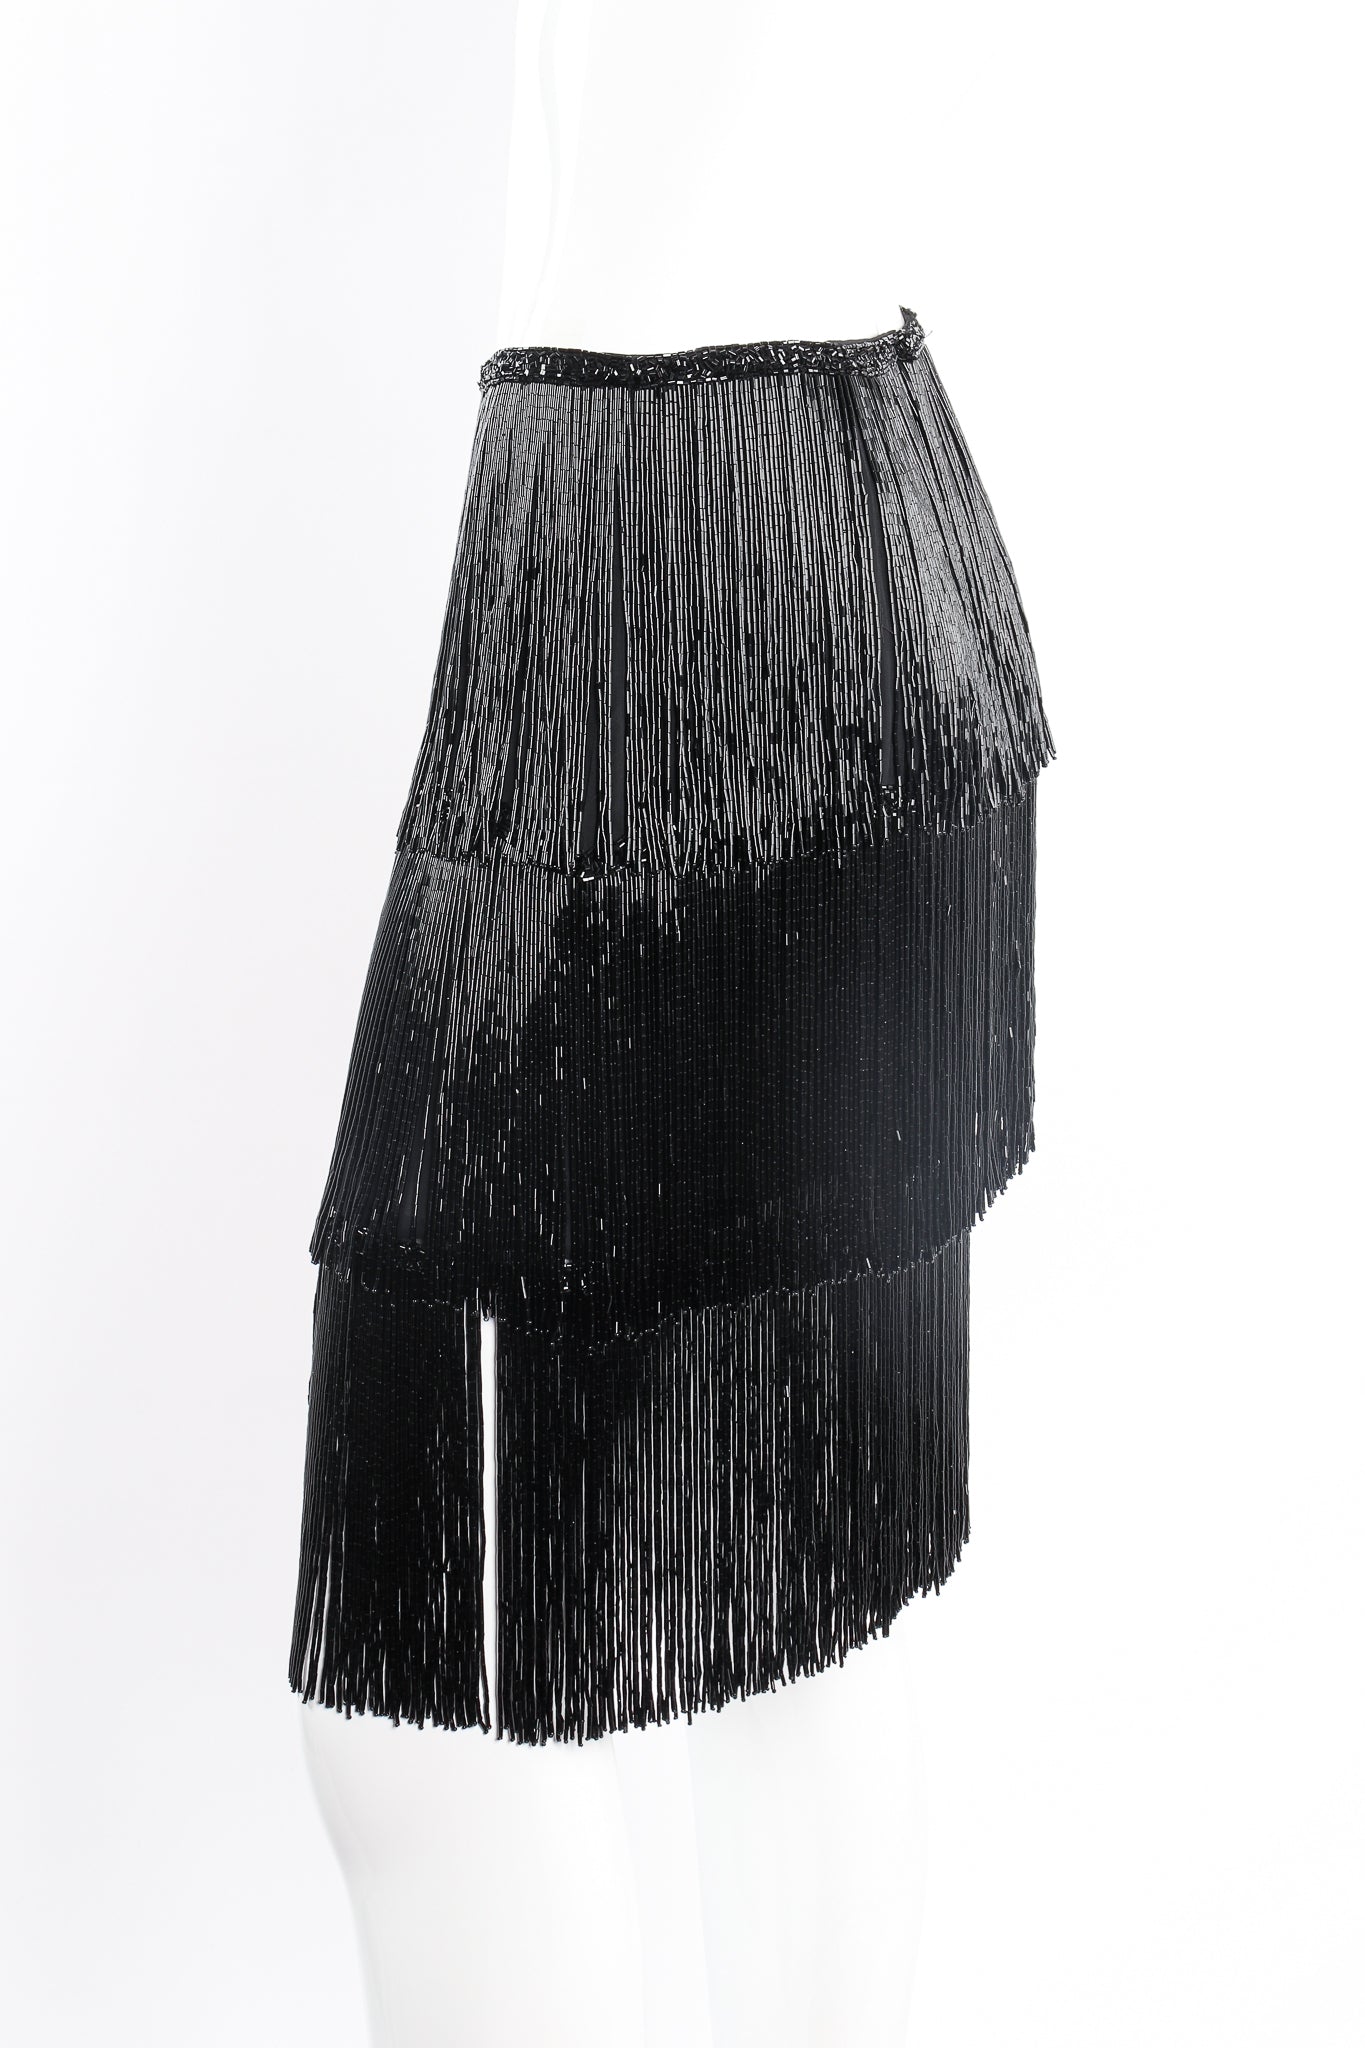 Vintage Naeem Khan Tiered Bead Fringe Skirt on Mannequin crop at Recess Los Angeles